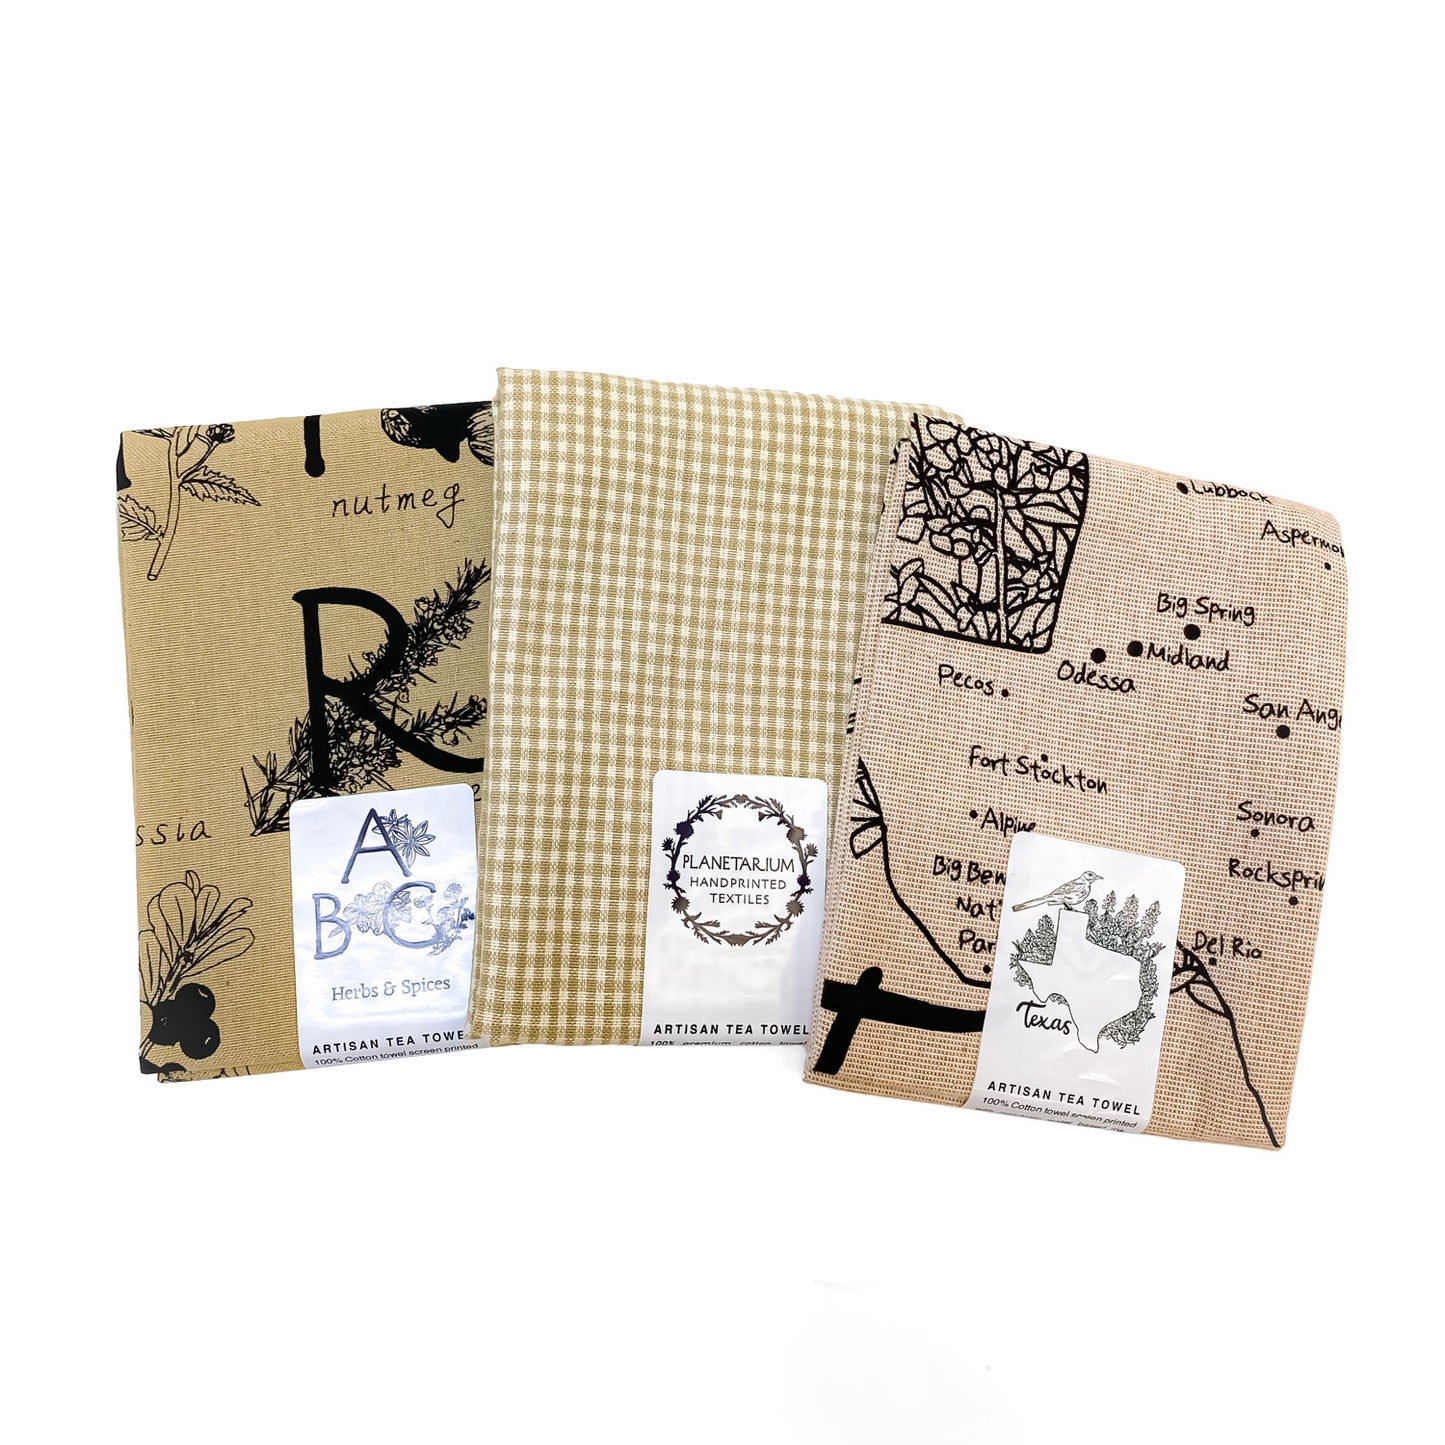 TEXAS & ABC Herbs & Spices Botanical Handprinted Artisan Tea Towel Set